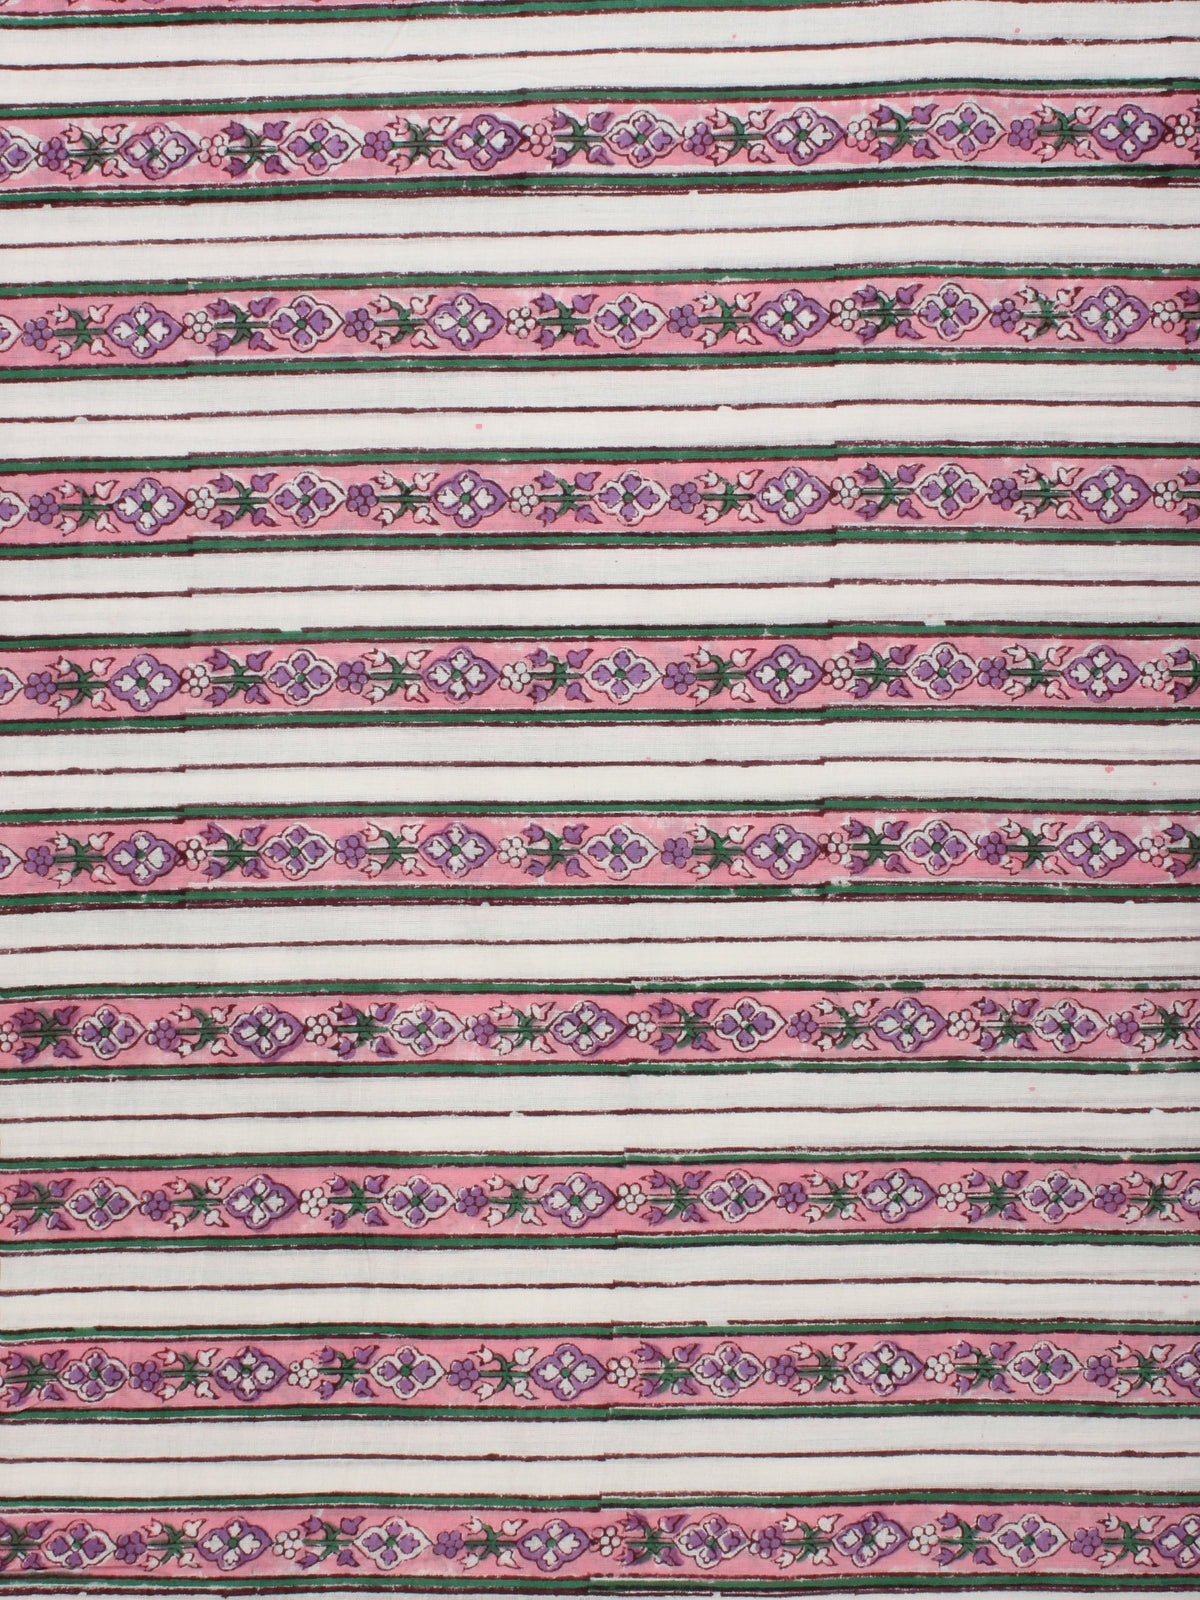 Pink Purple White Block Printed Cotton Fabric Per Meter - F001F2218